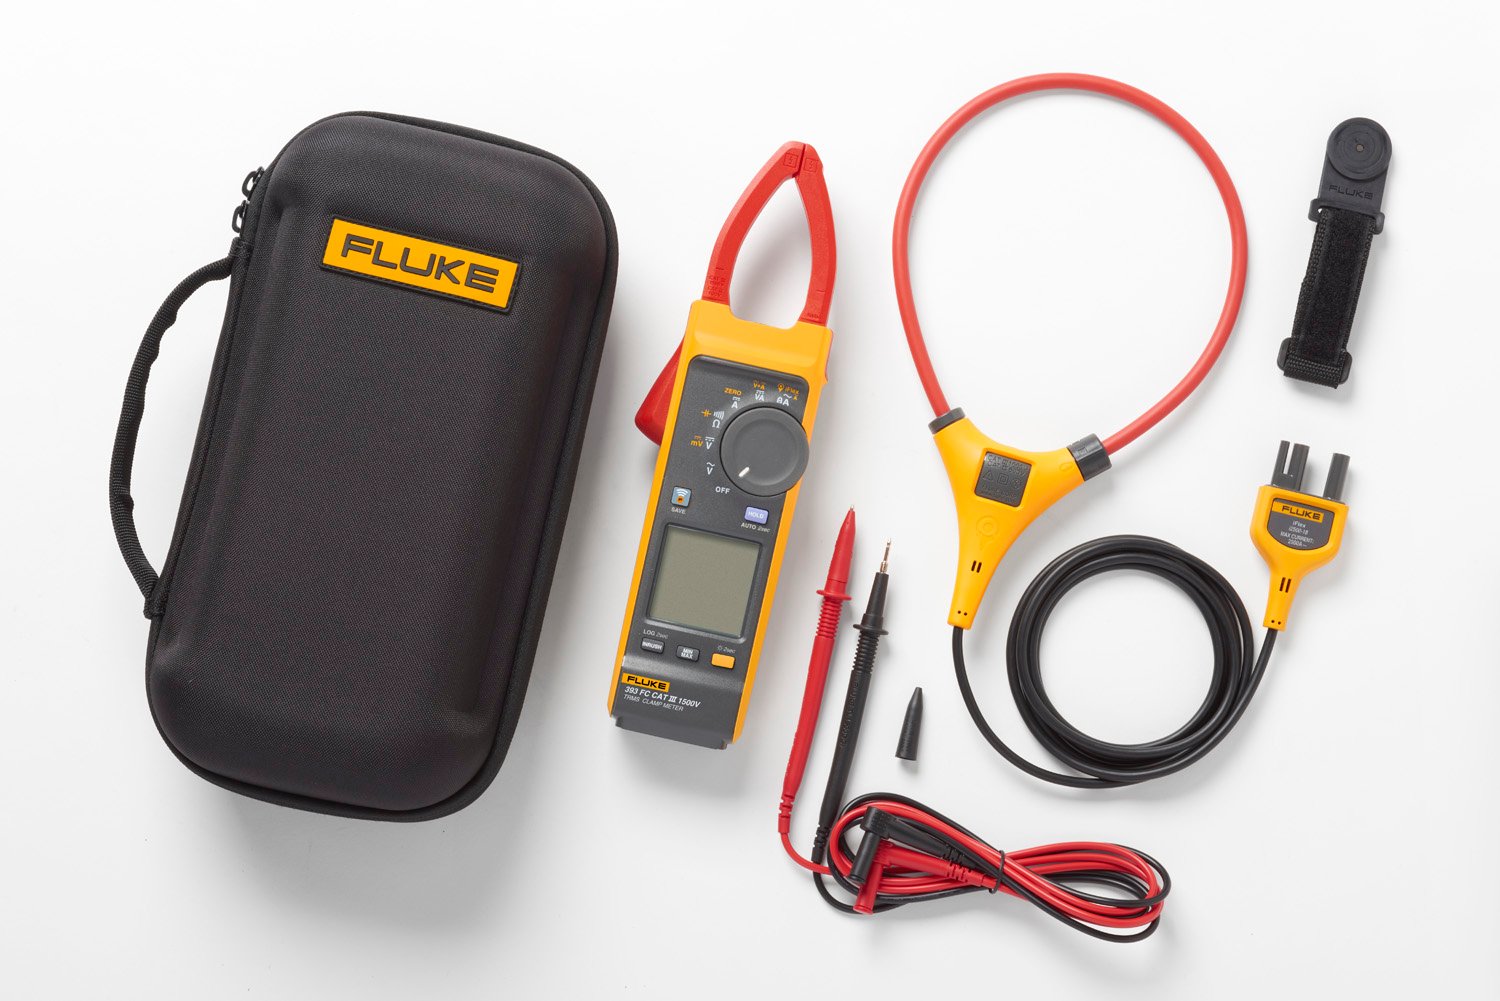 Fluke 393 FC med testledninger, iFlex fleksibel strømprobe, magnetholder og veske